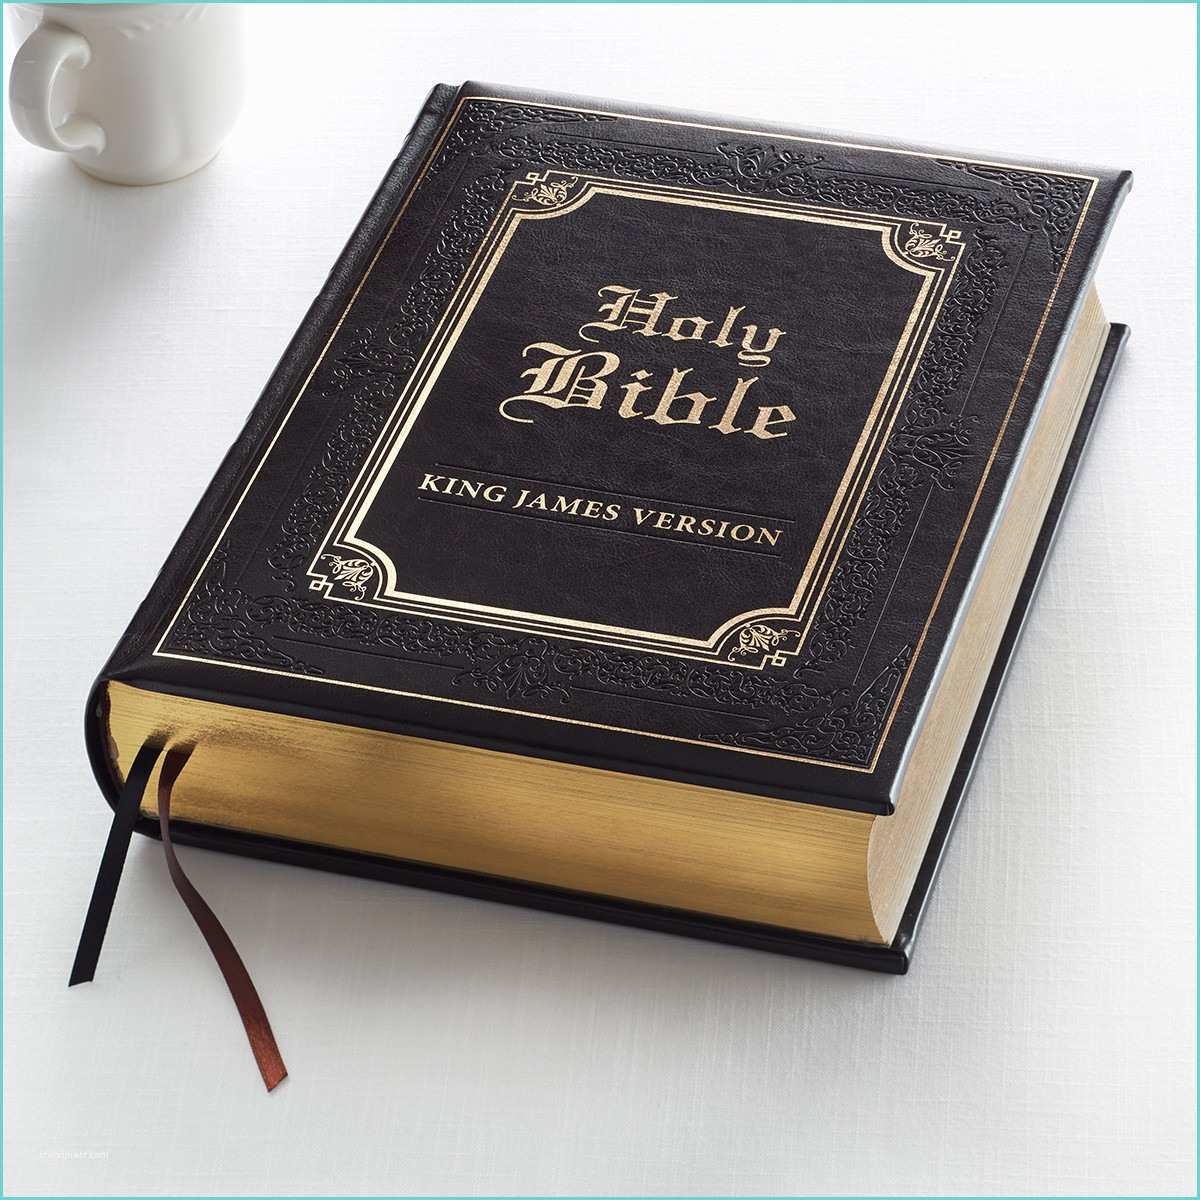 Bible Kjv Verses King James Version Illustrated Edition Family Bible Faux